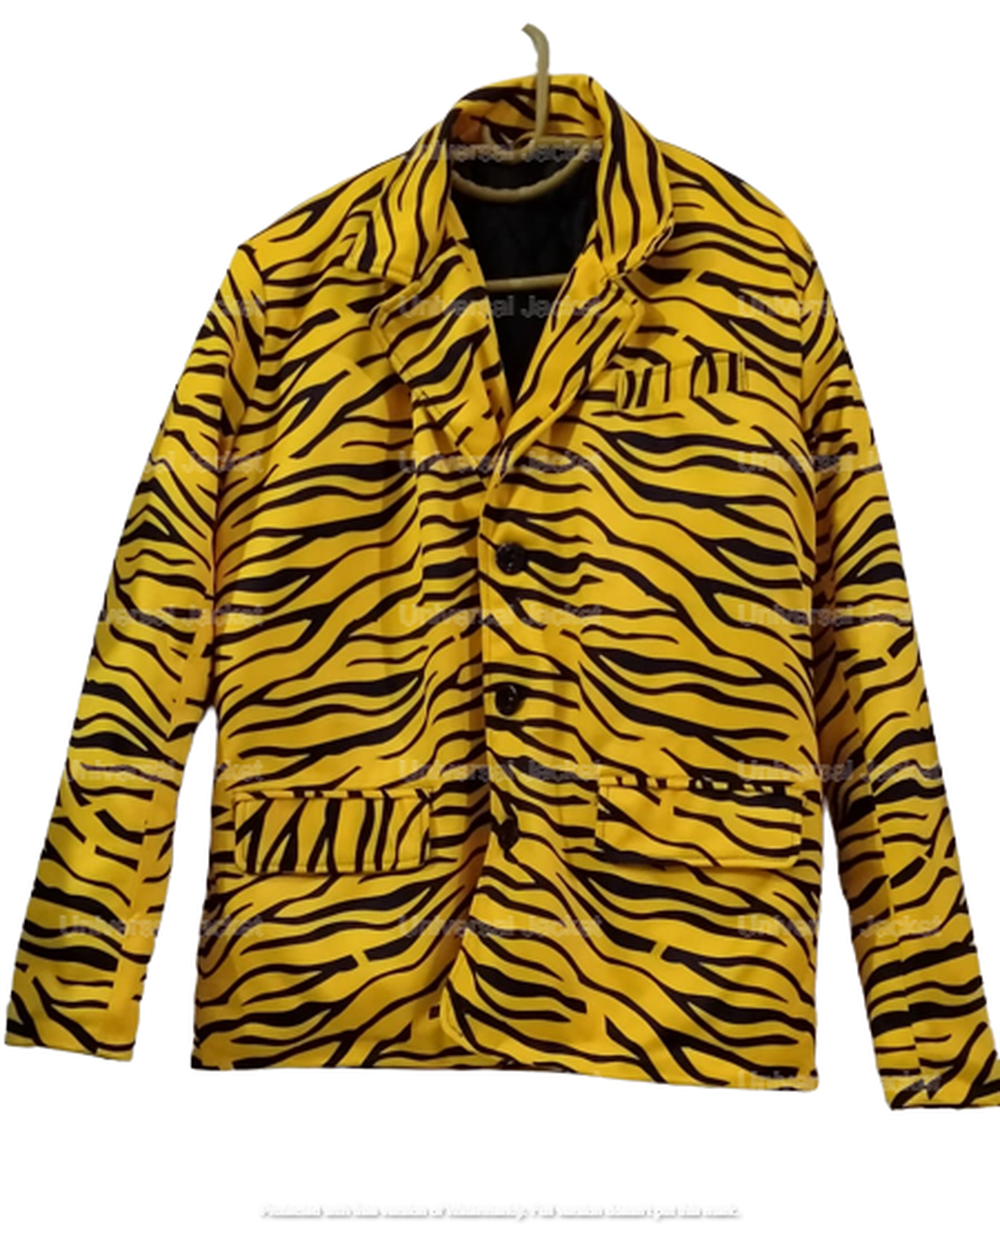 Eddie Van Halen Yellow Tiger Jacket | Universal Jacket